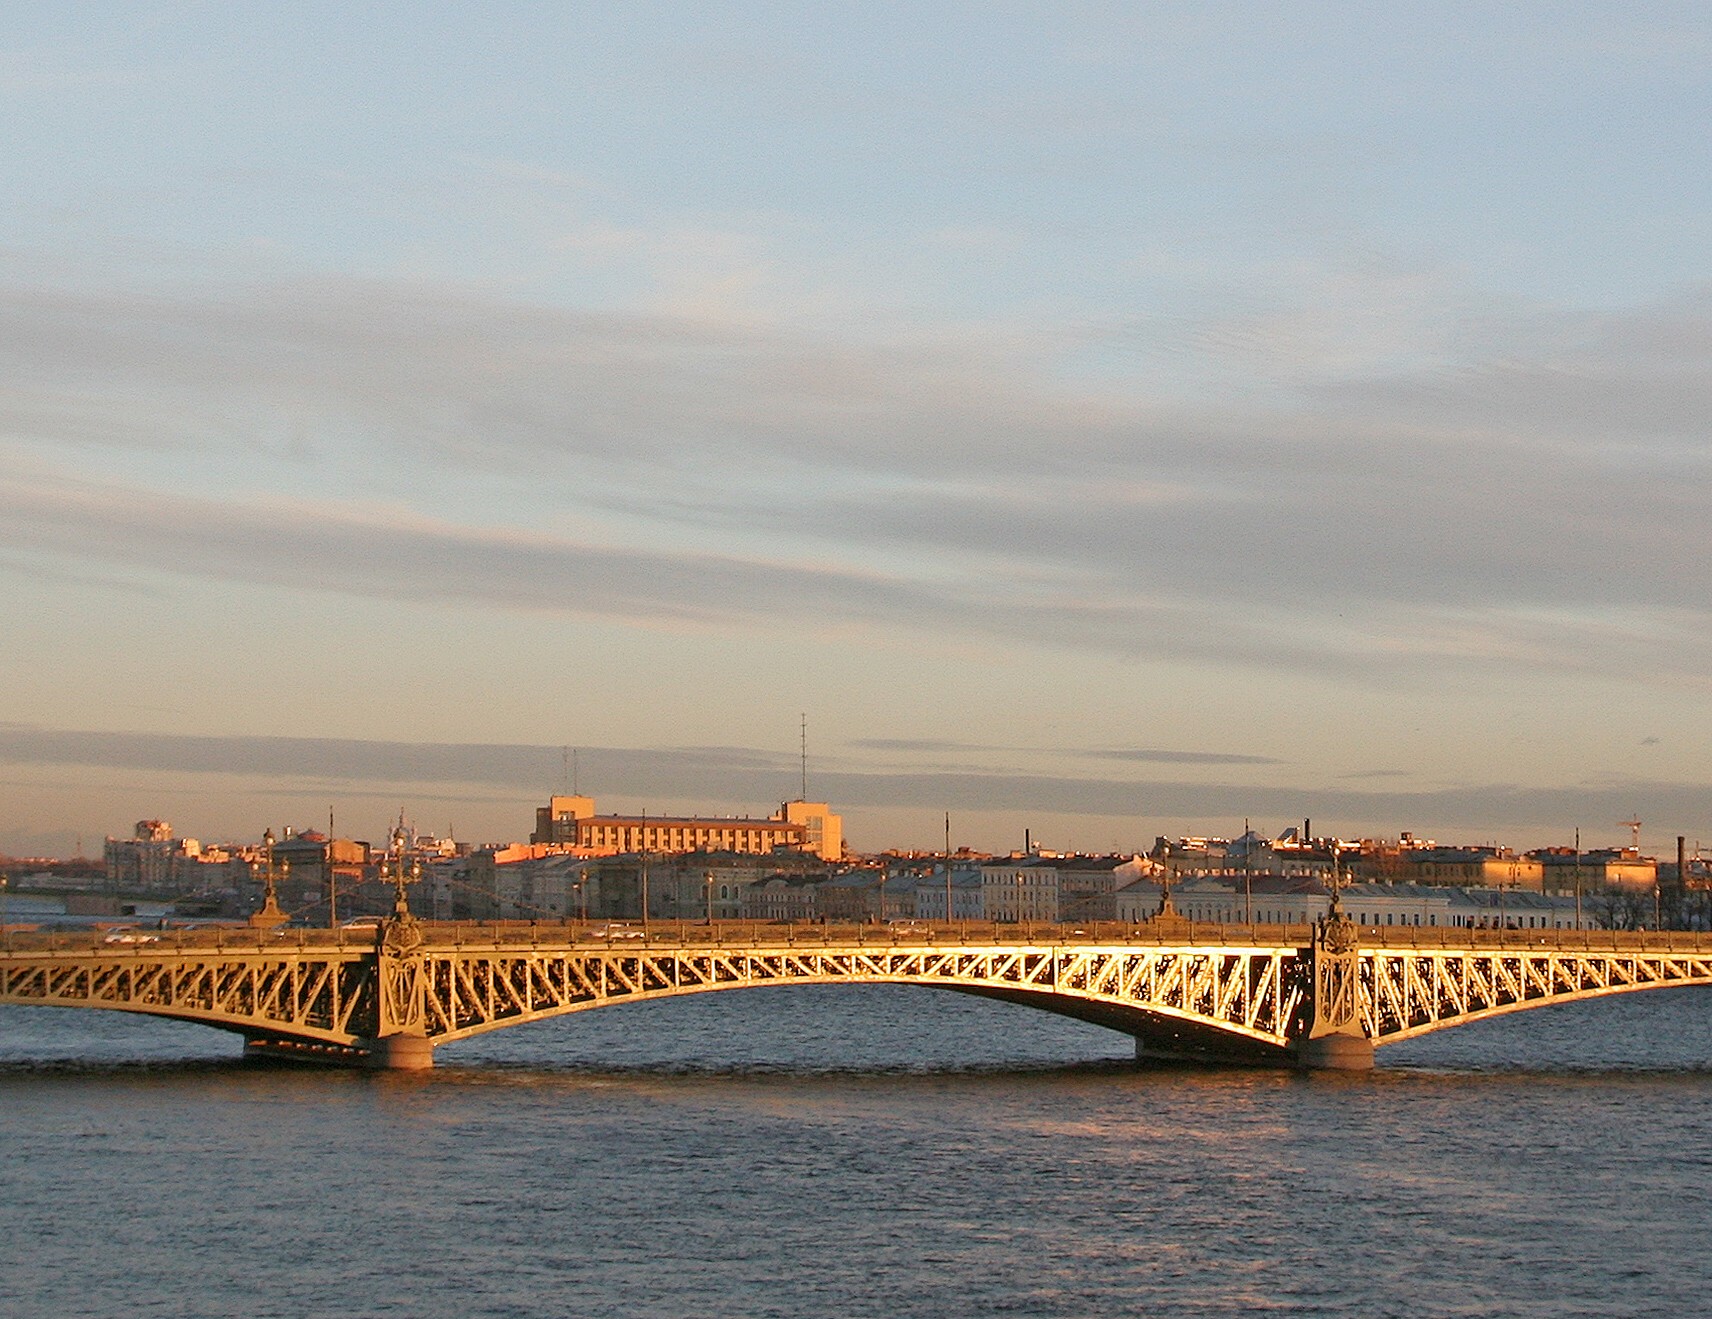 Troitsky Bridge in St. Petersburg